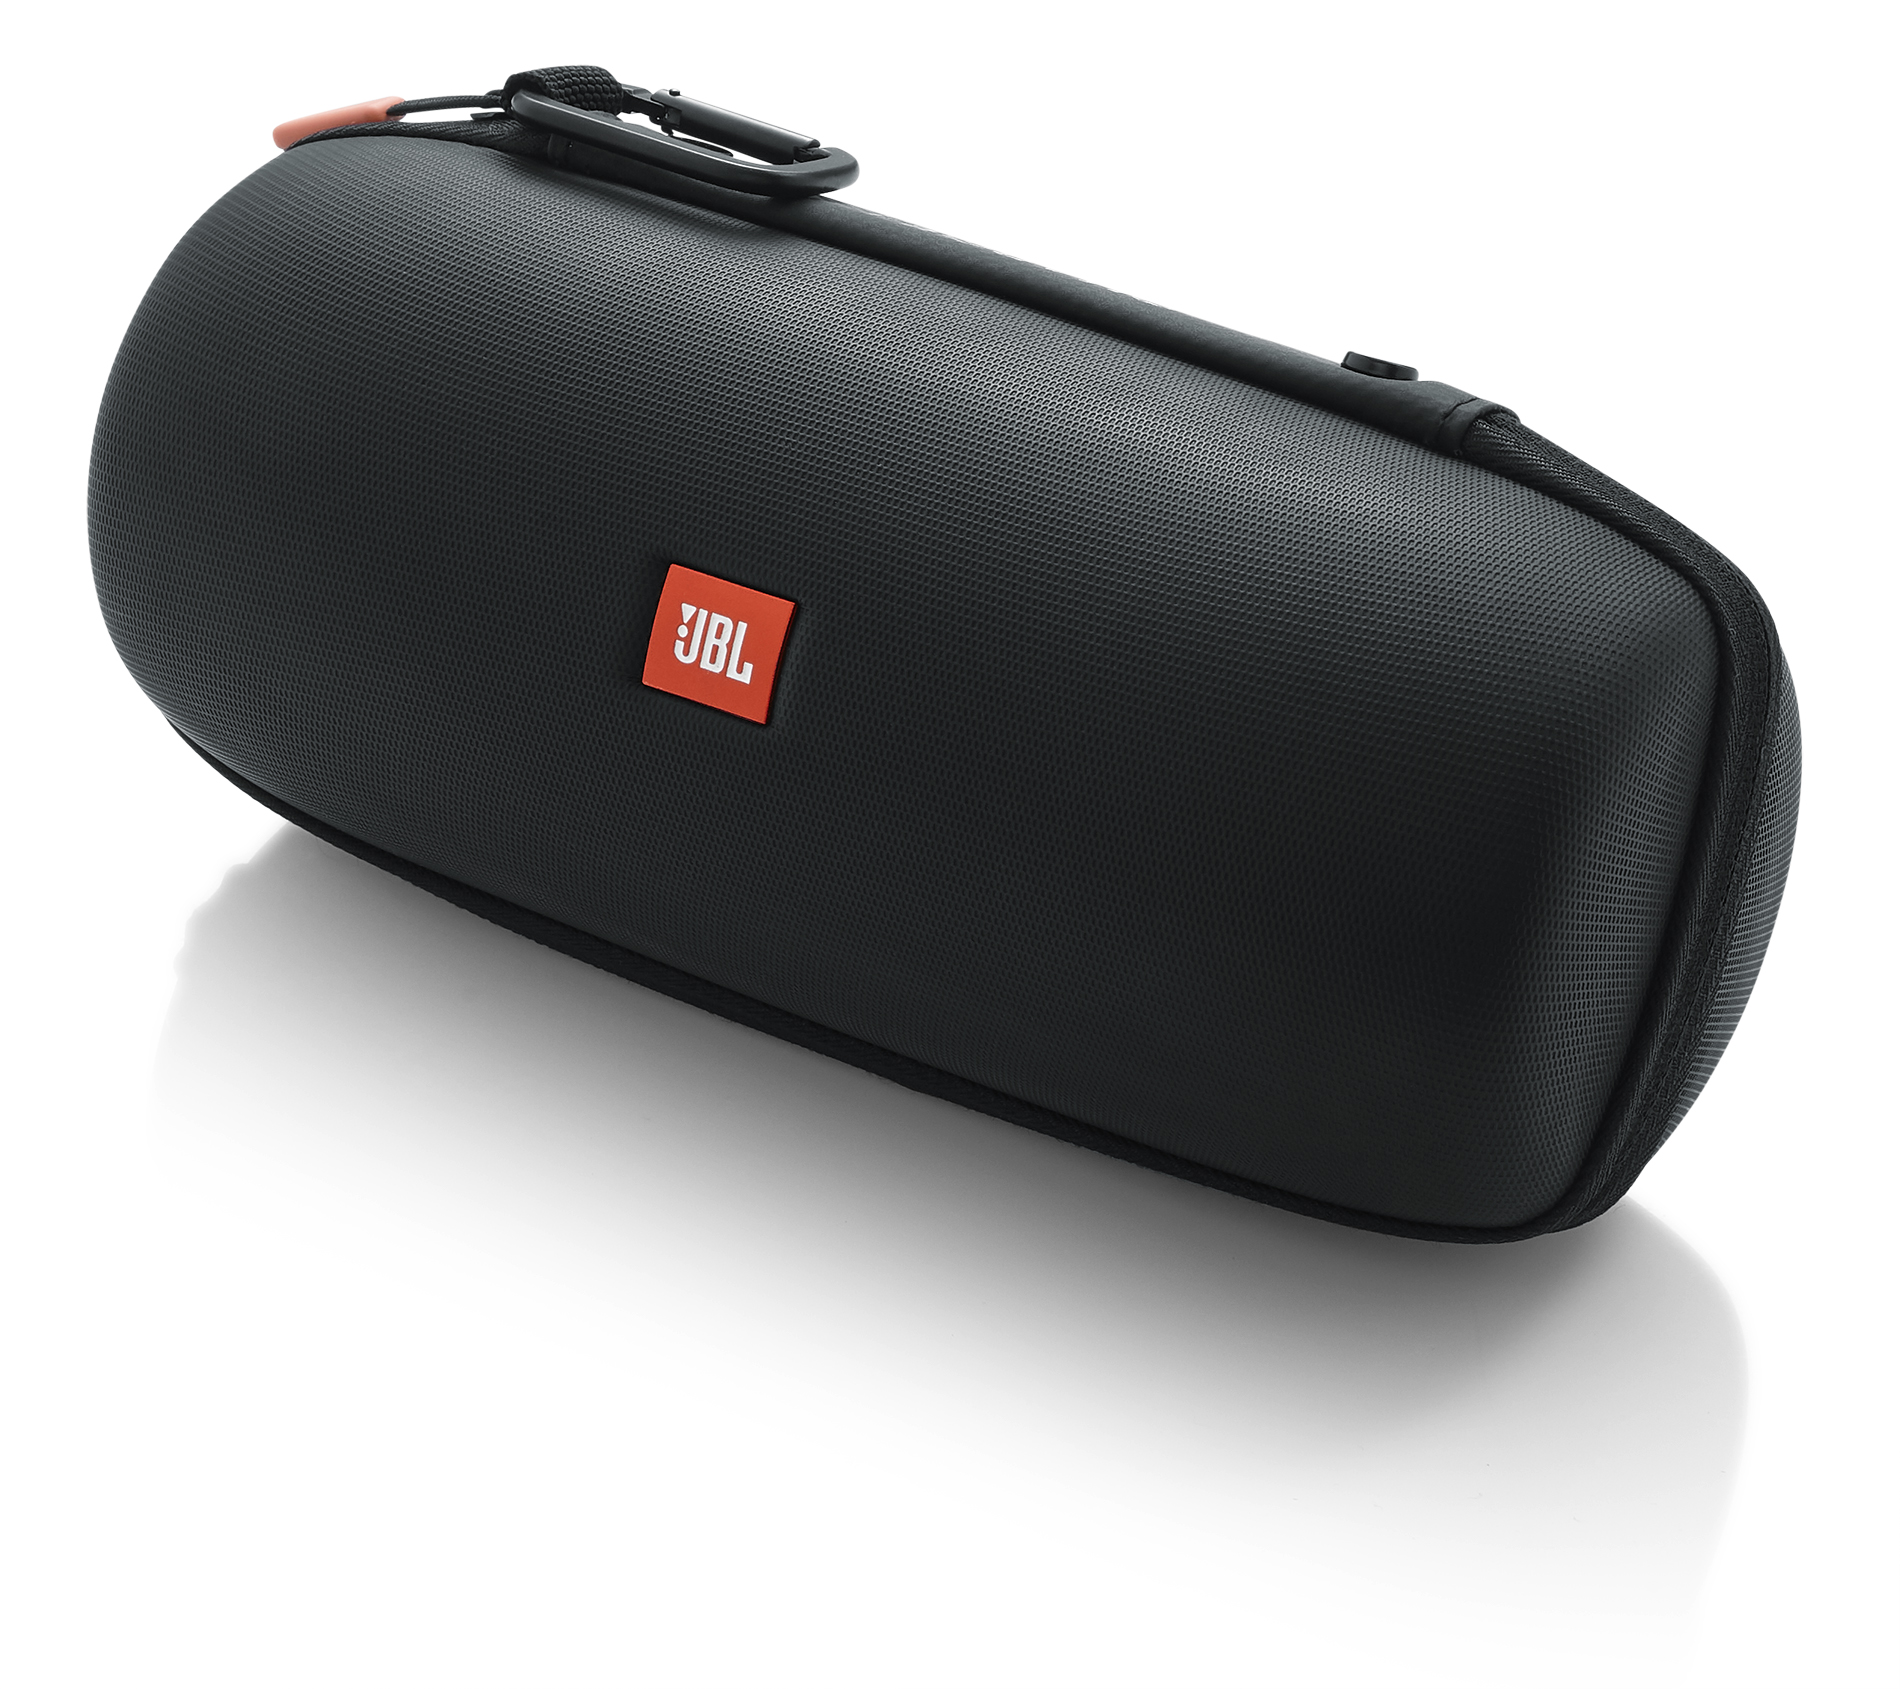 Ingang Ruwe olie ontslaan Molded Carry Case For Jbl Charge 4 Speaker – JBL-CHARGE4-CASE - JBL Bags